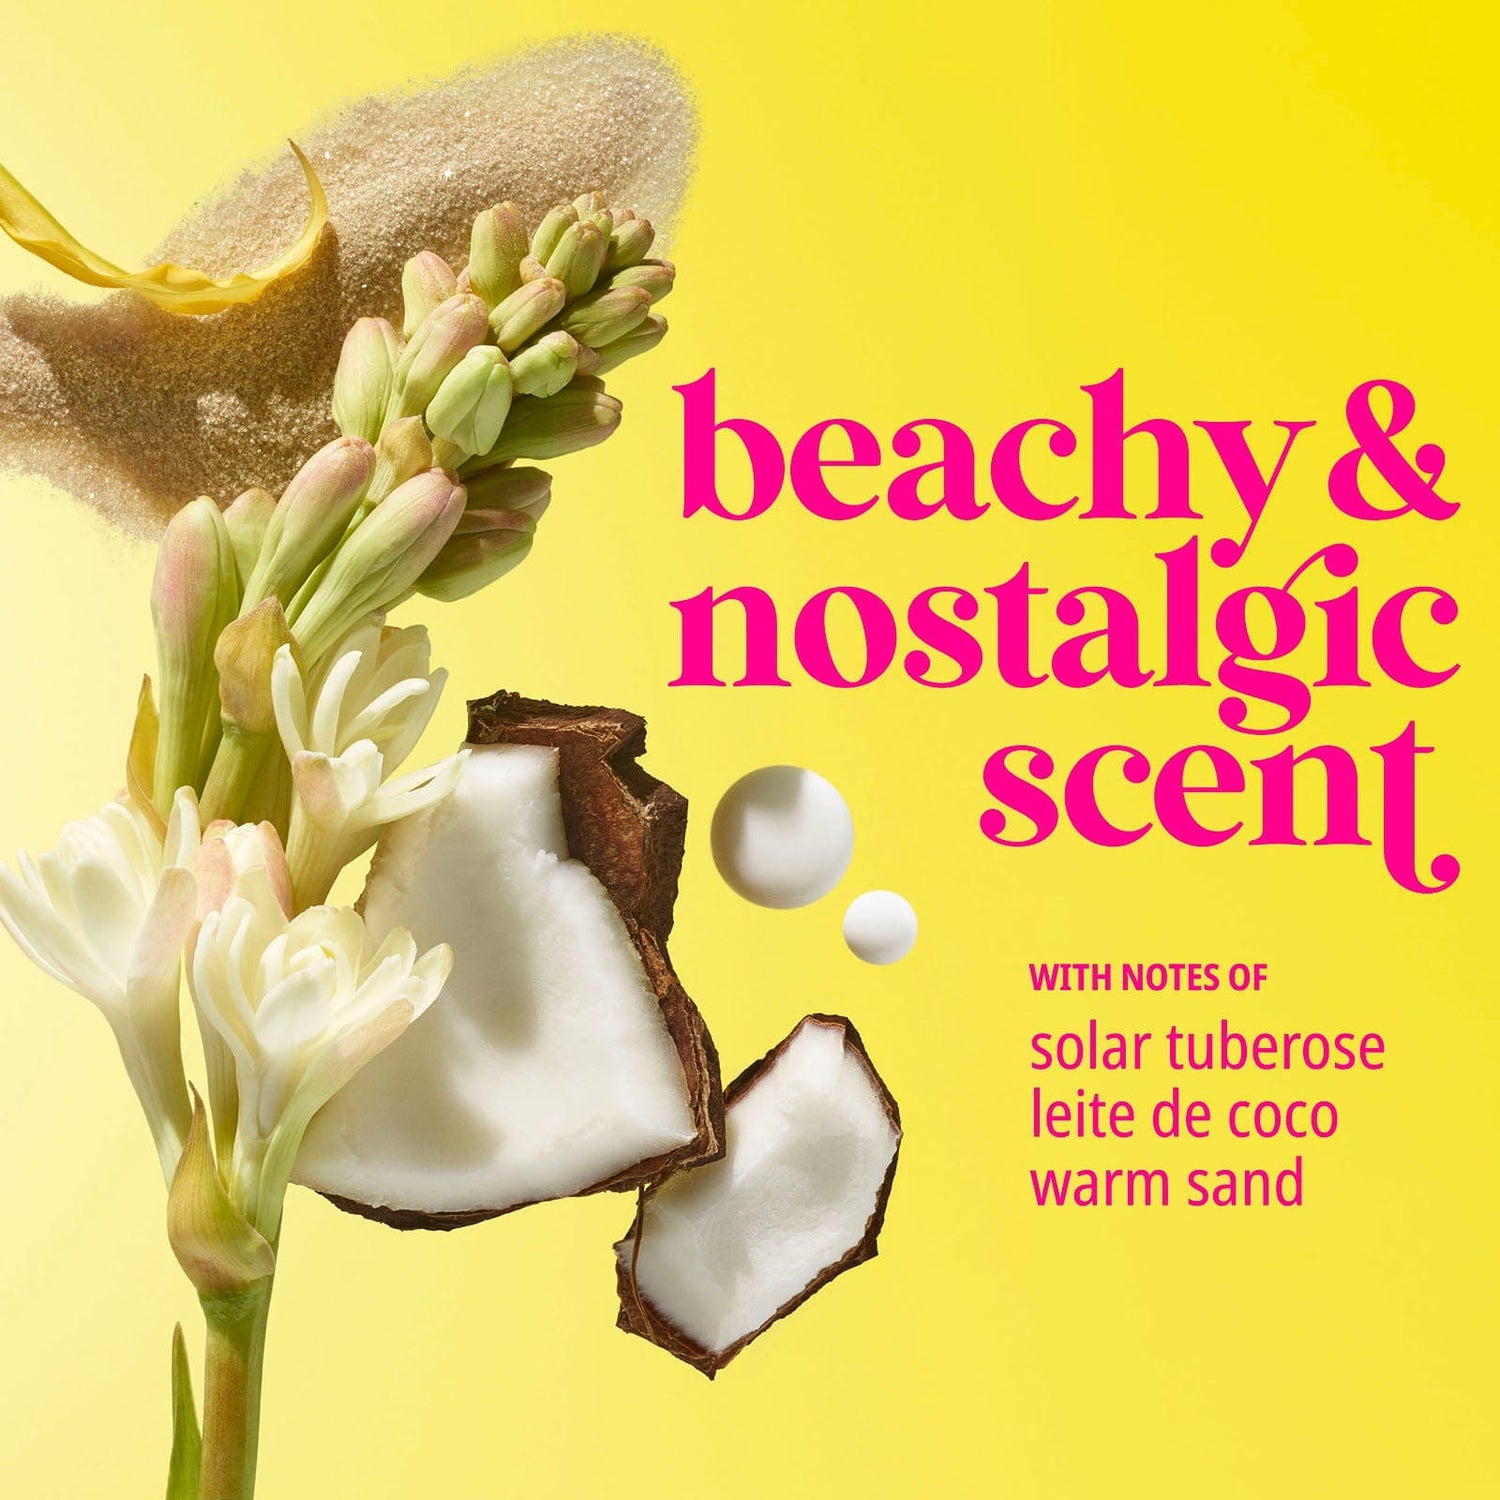 Beachy &amp; nostalgic scent with notes of solar tuberose leite de coco warm sand